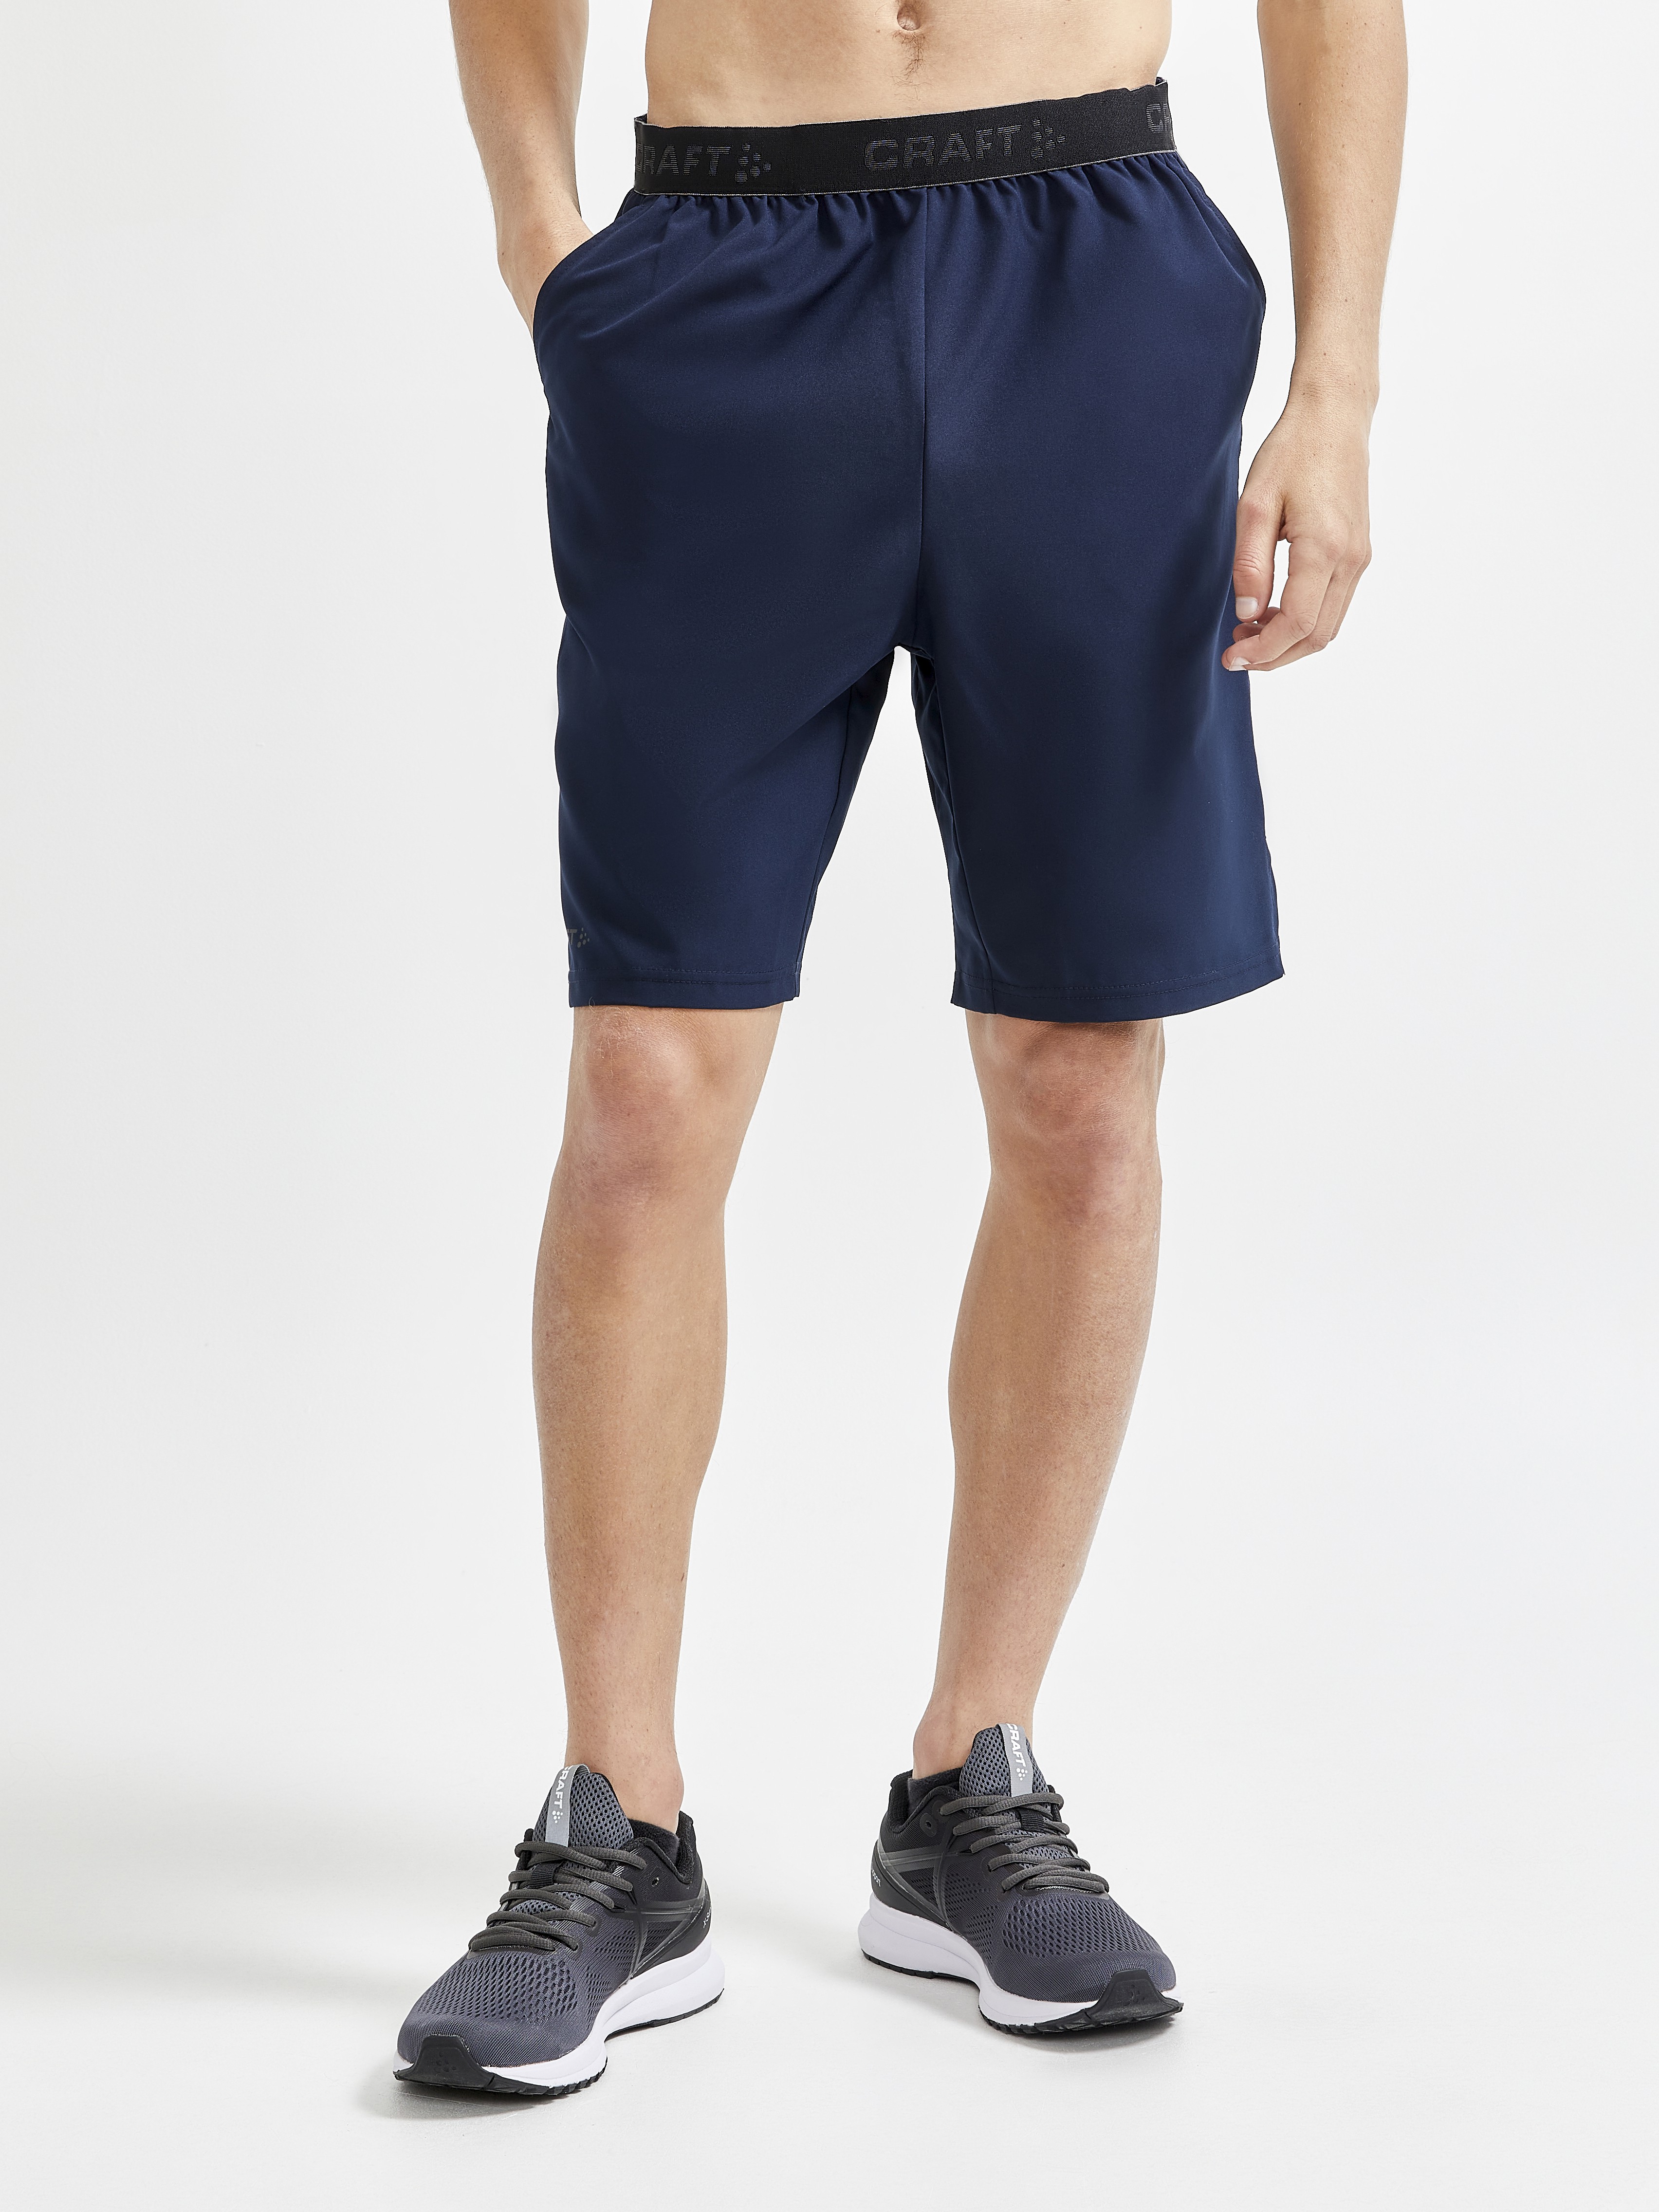 Athletic Shorts for Men | Craft Sportswear